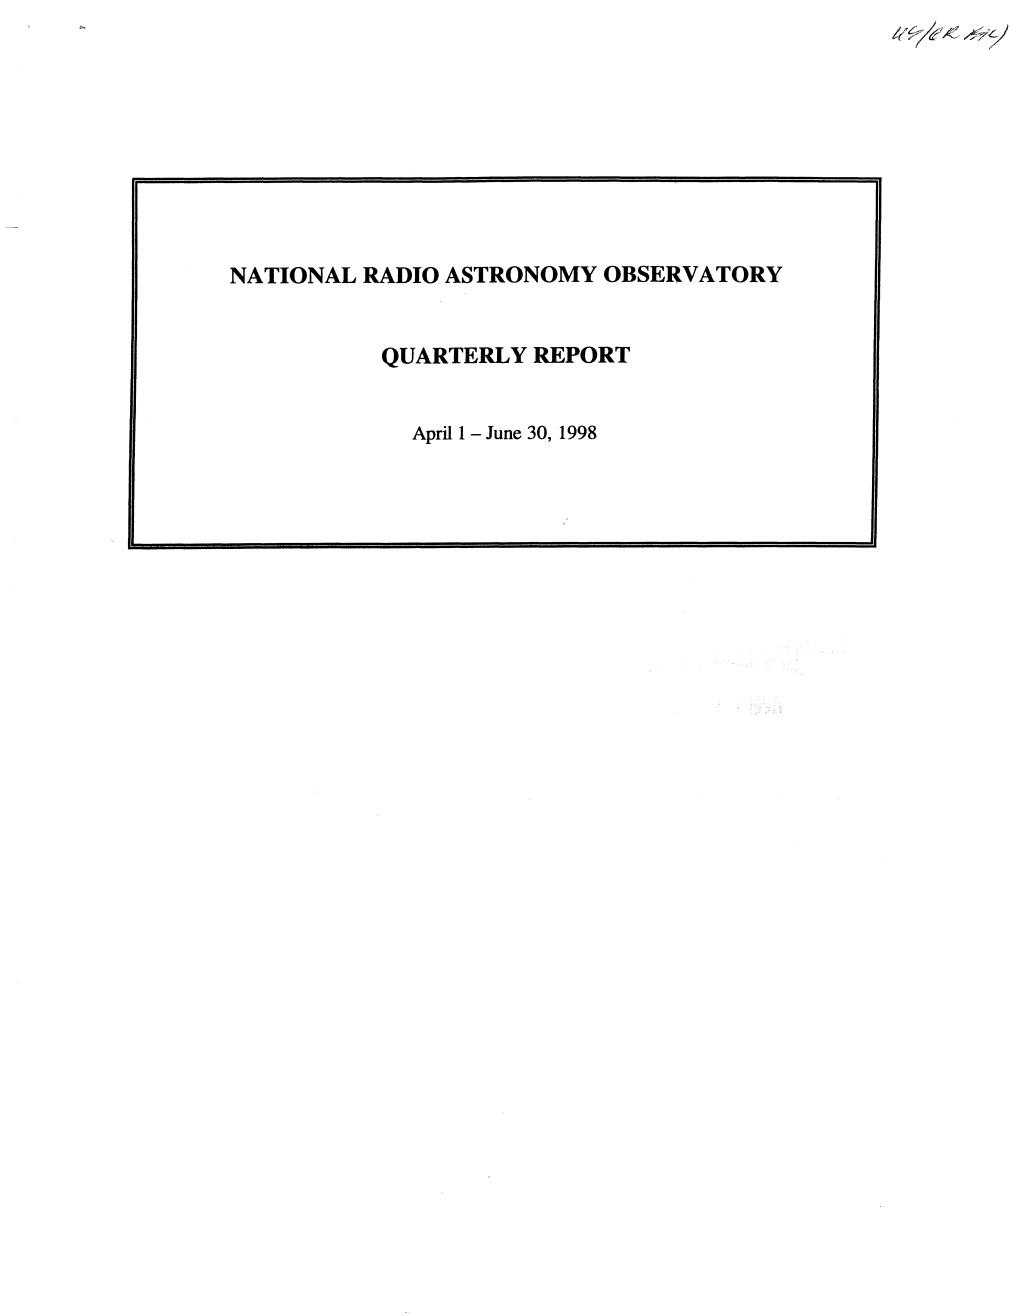 National Radio Astronomy Observatory Quarterly